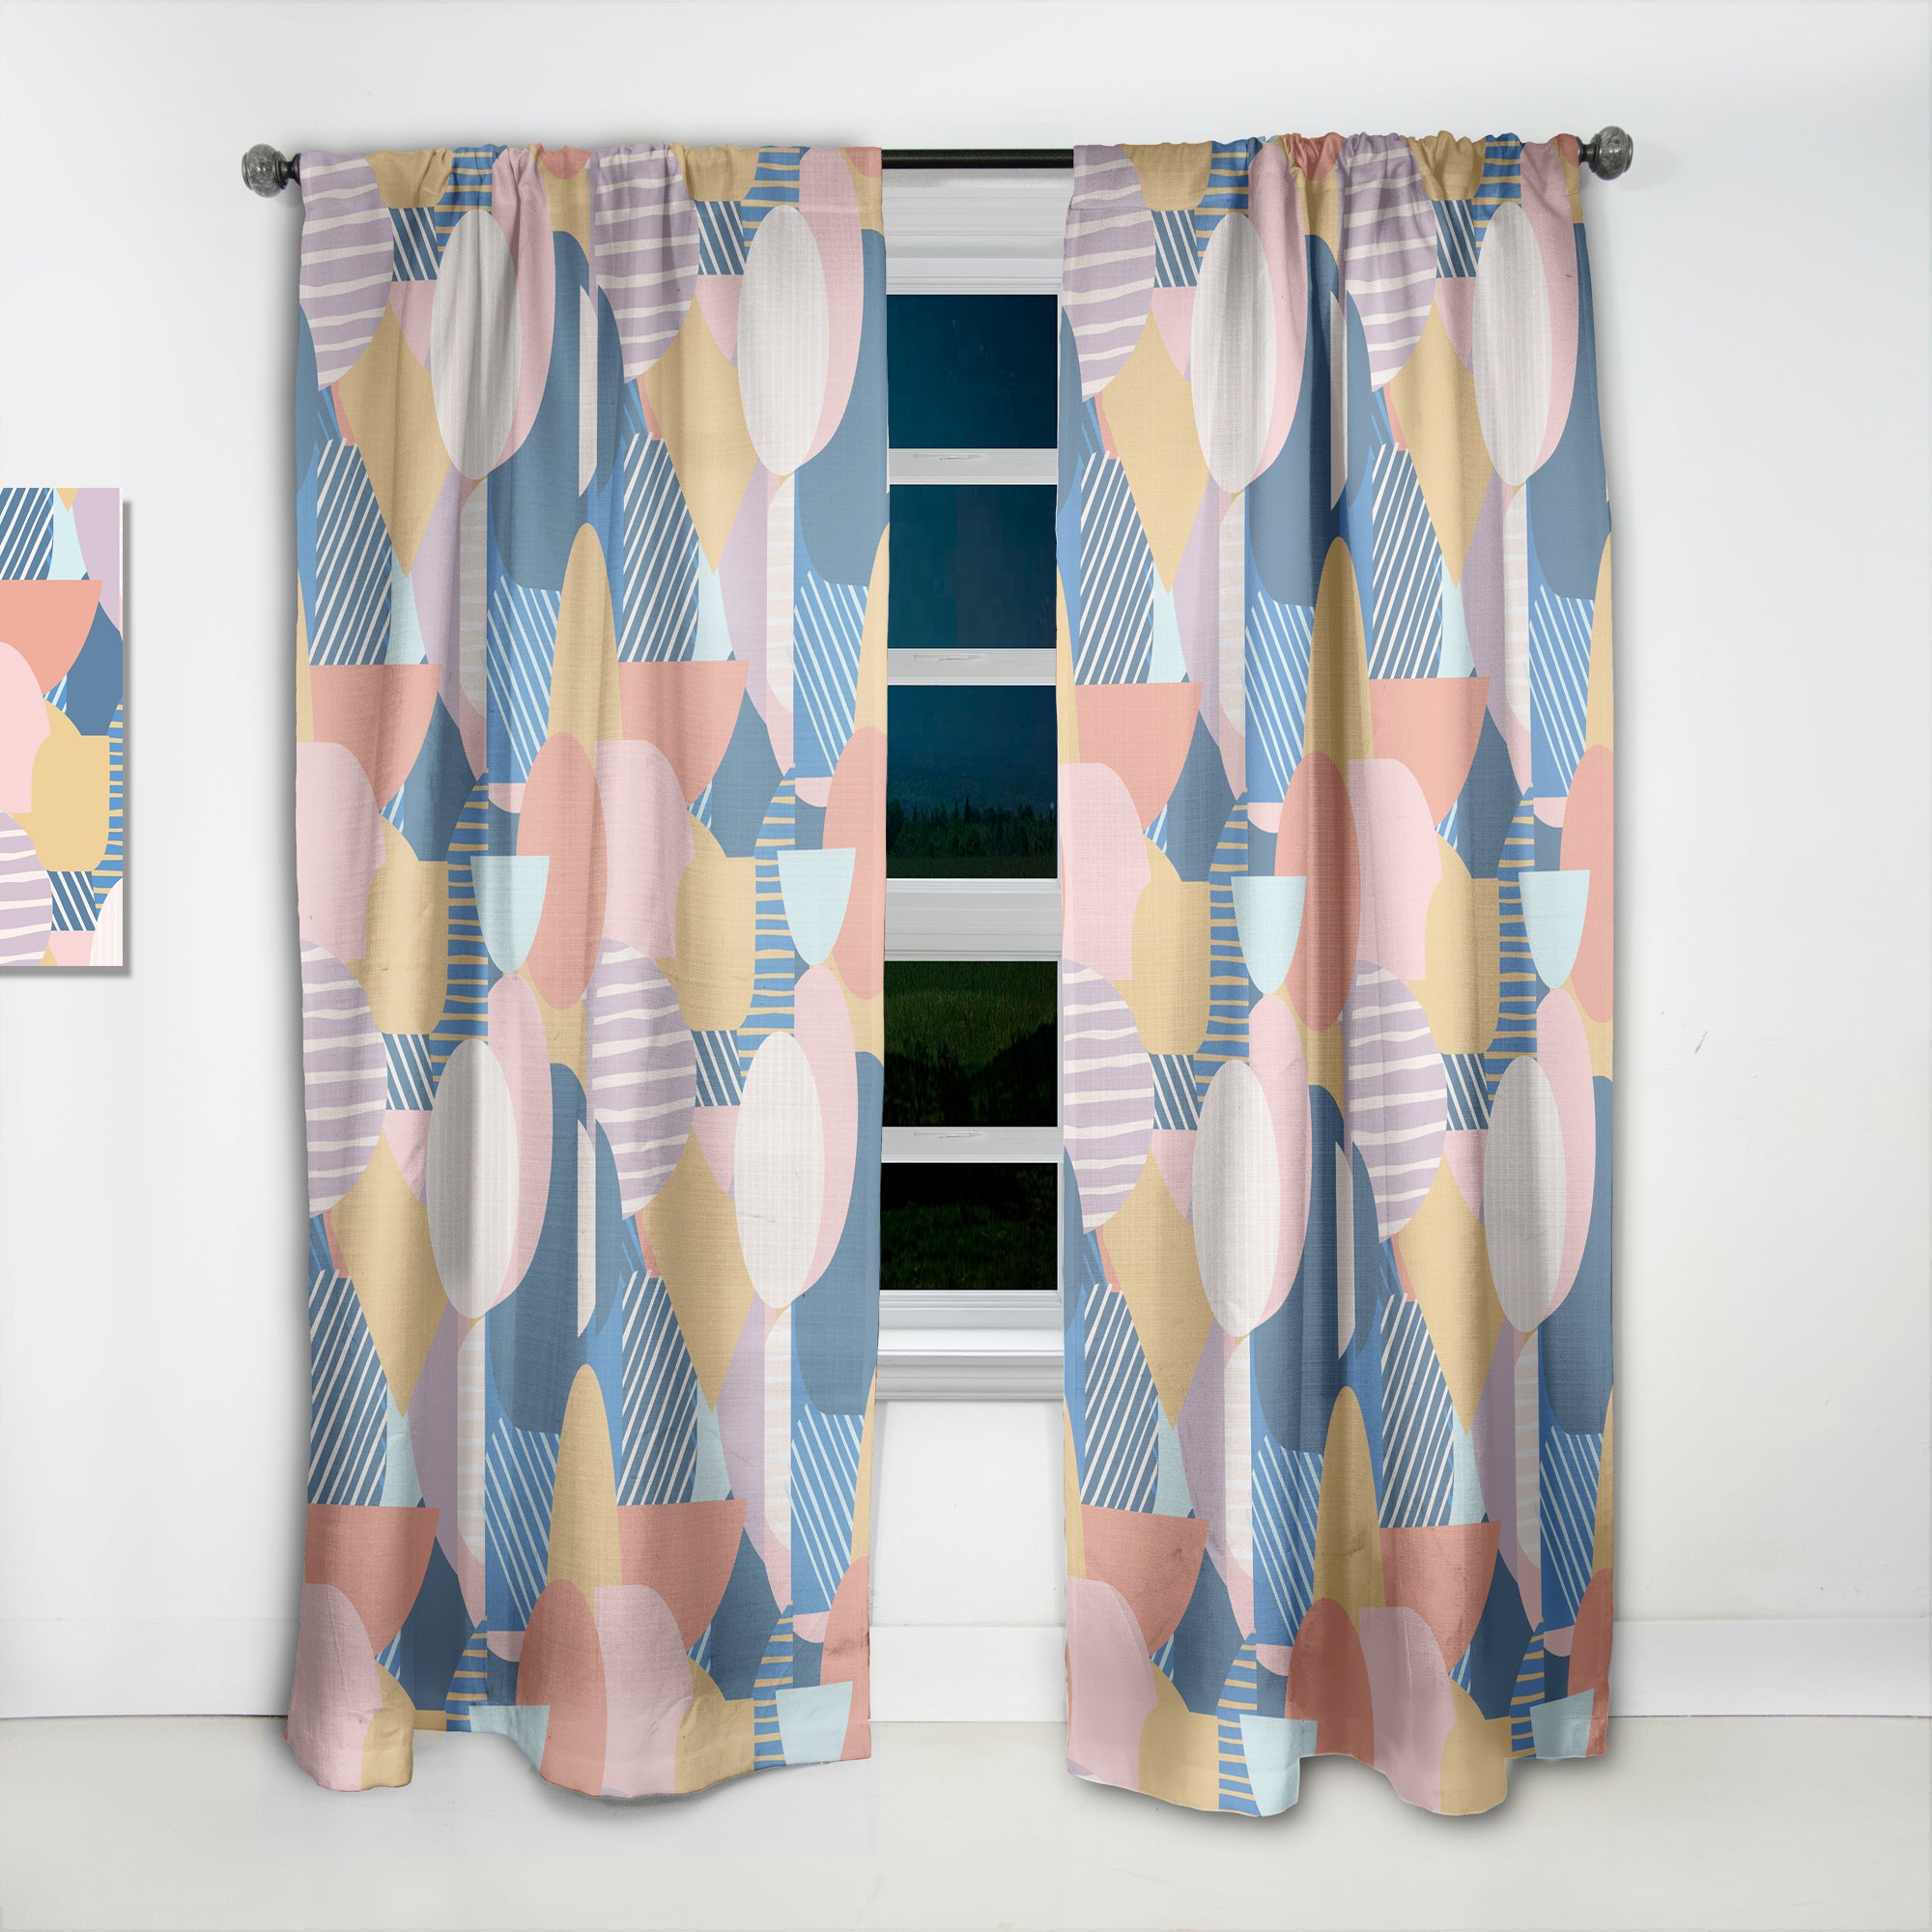 Designart 'Modern geometric shapes pattern' Mid-Century Modern Curtain Panel